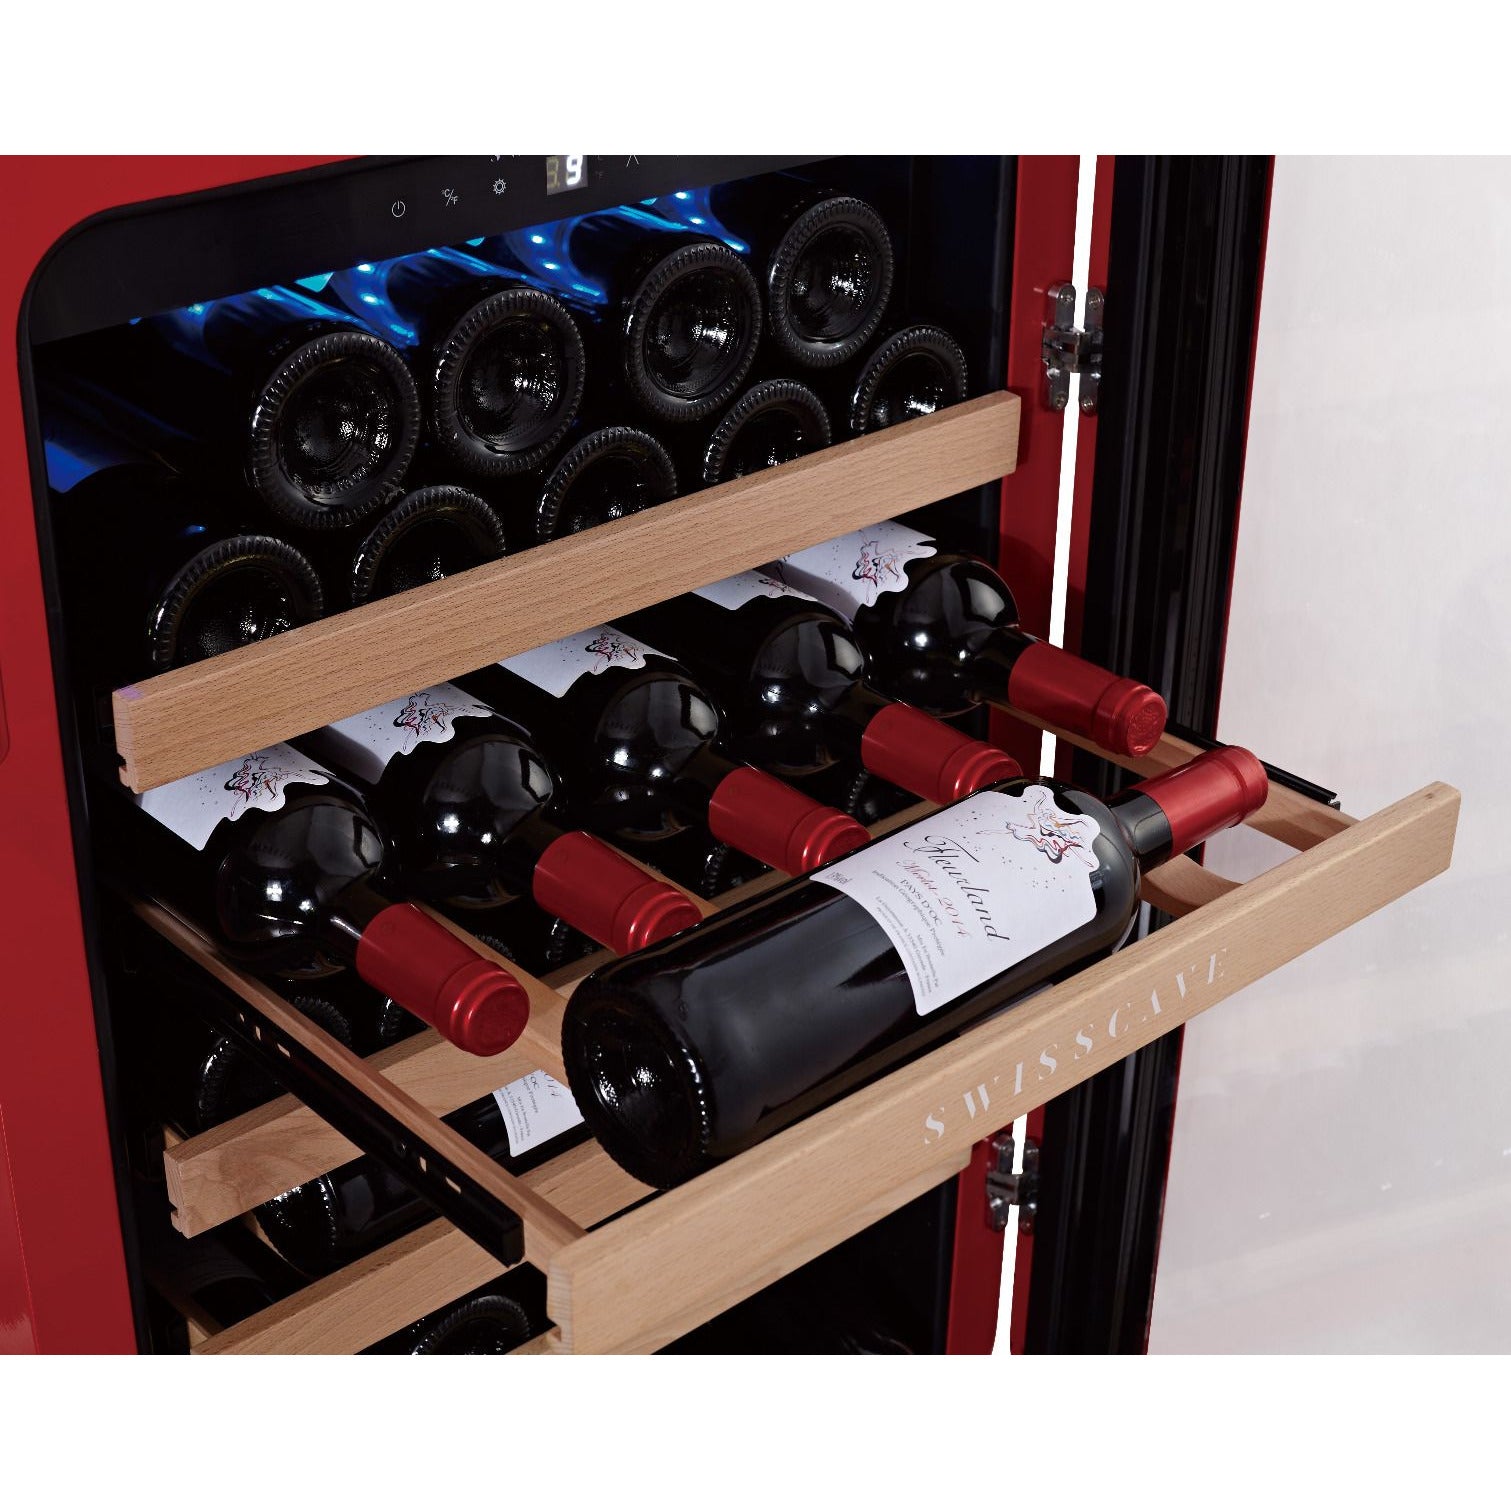 SWISSCAVE - 35 Bottle Single Temperature Zone Wine Cooler - WL120F